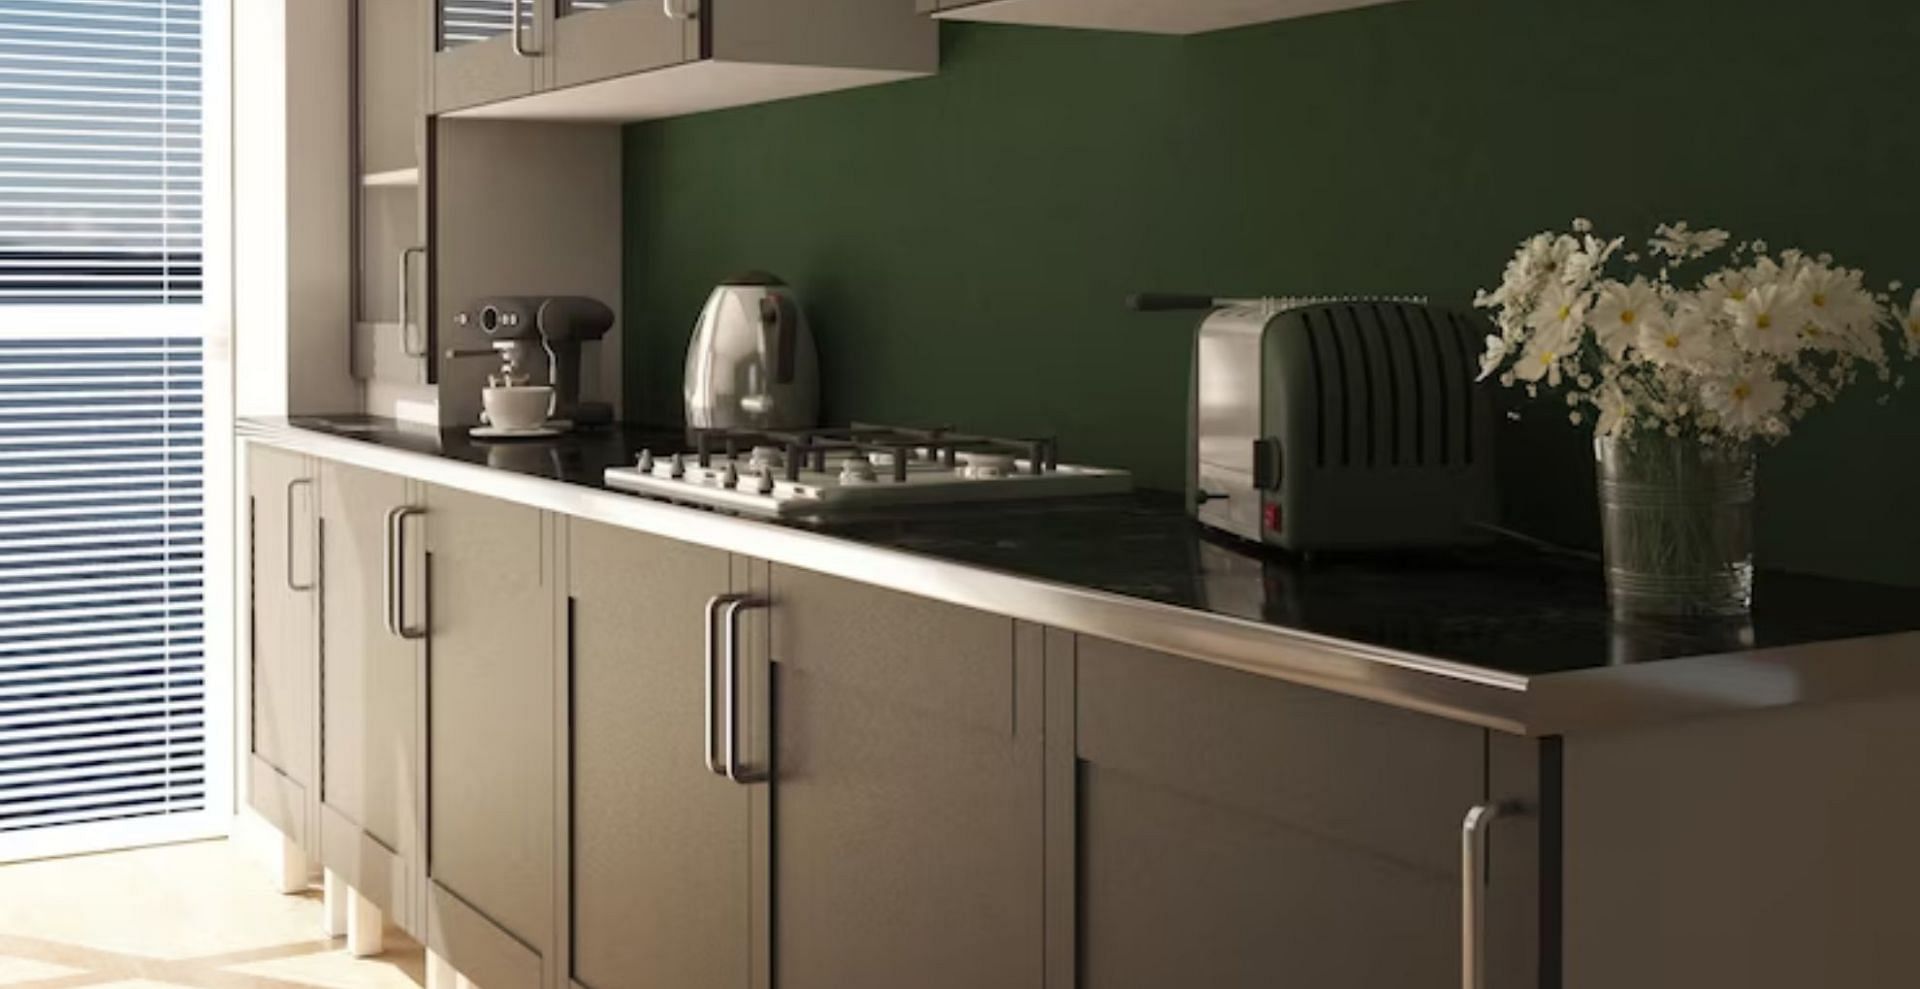 Best kitchen decor ideas to utilize the space